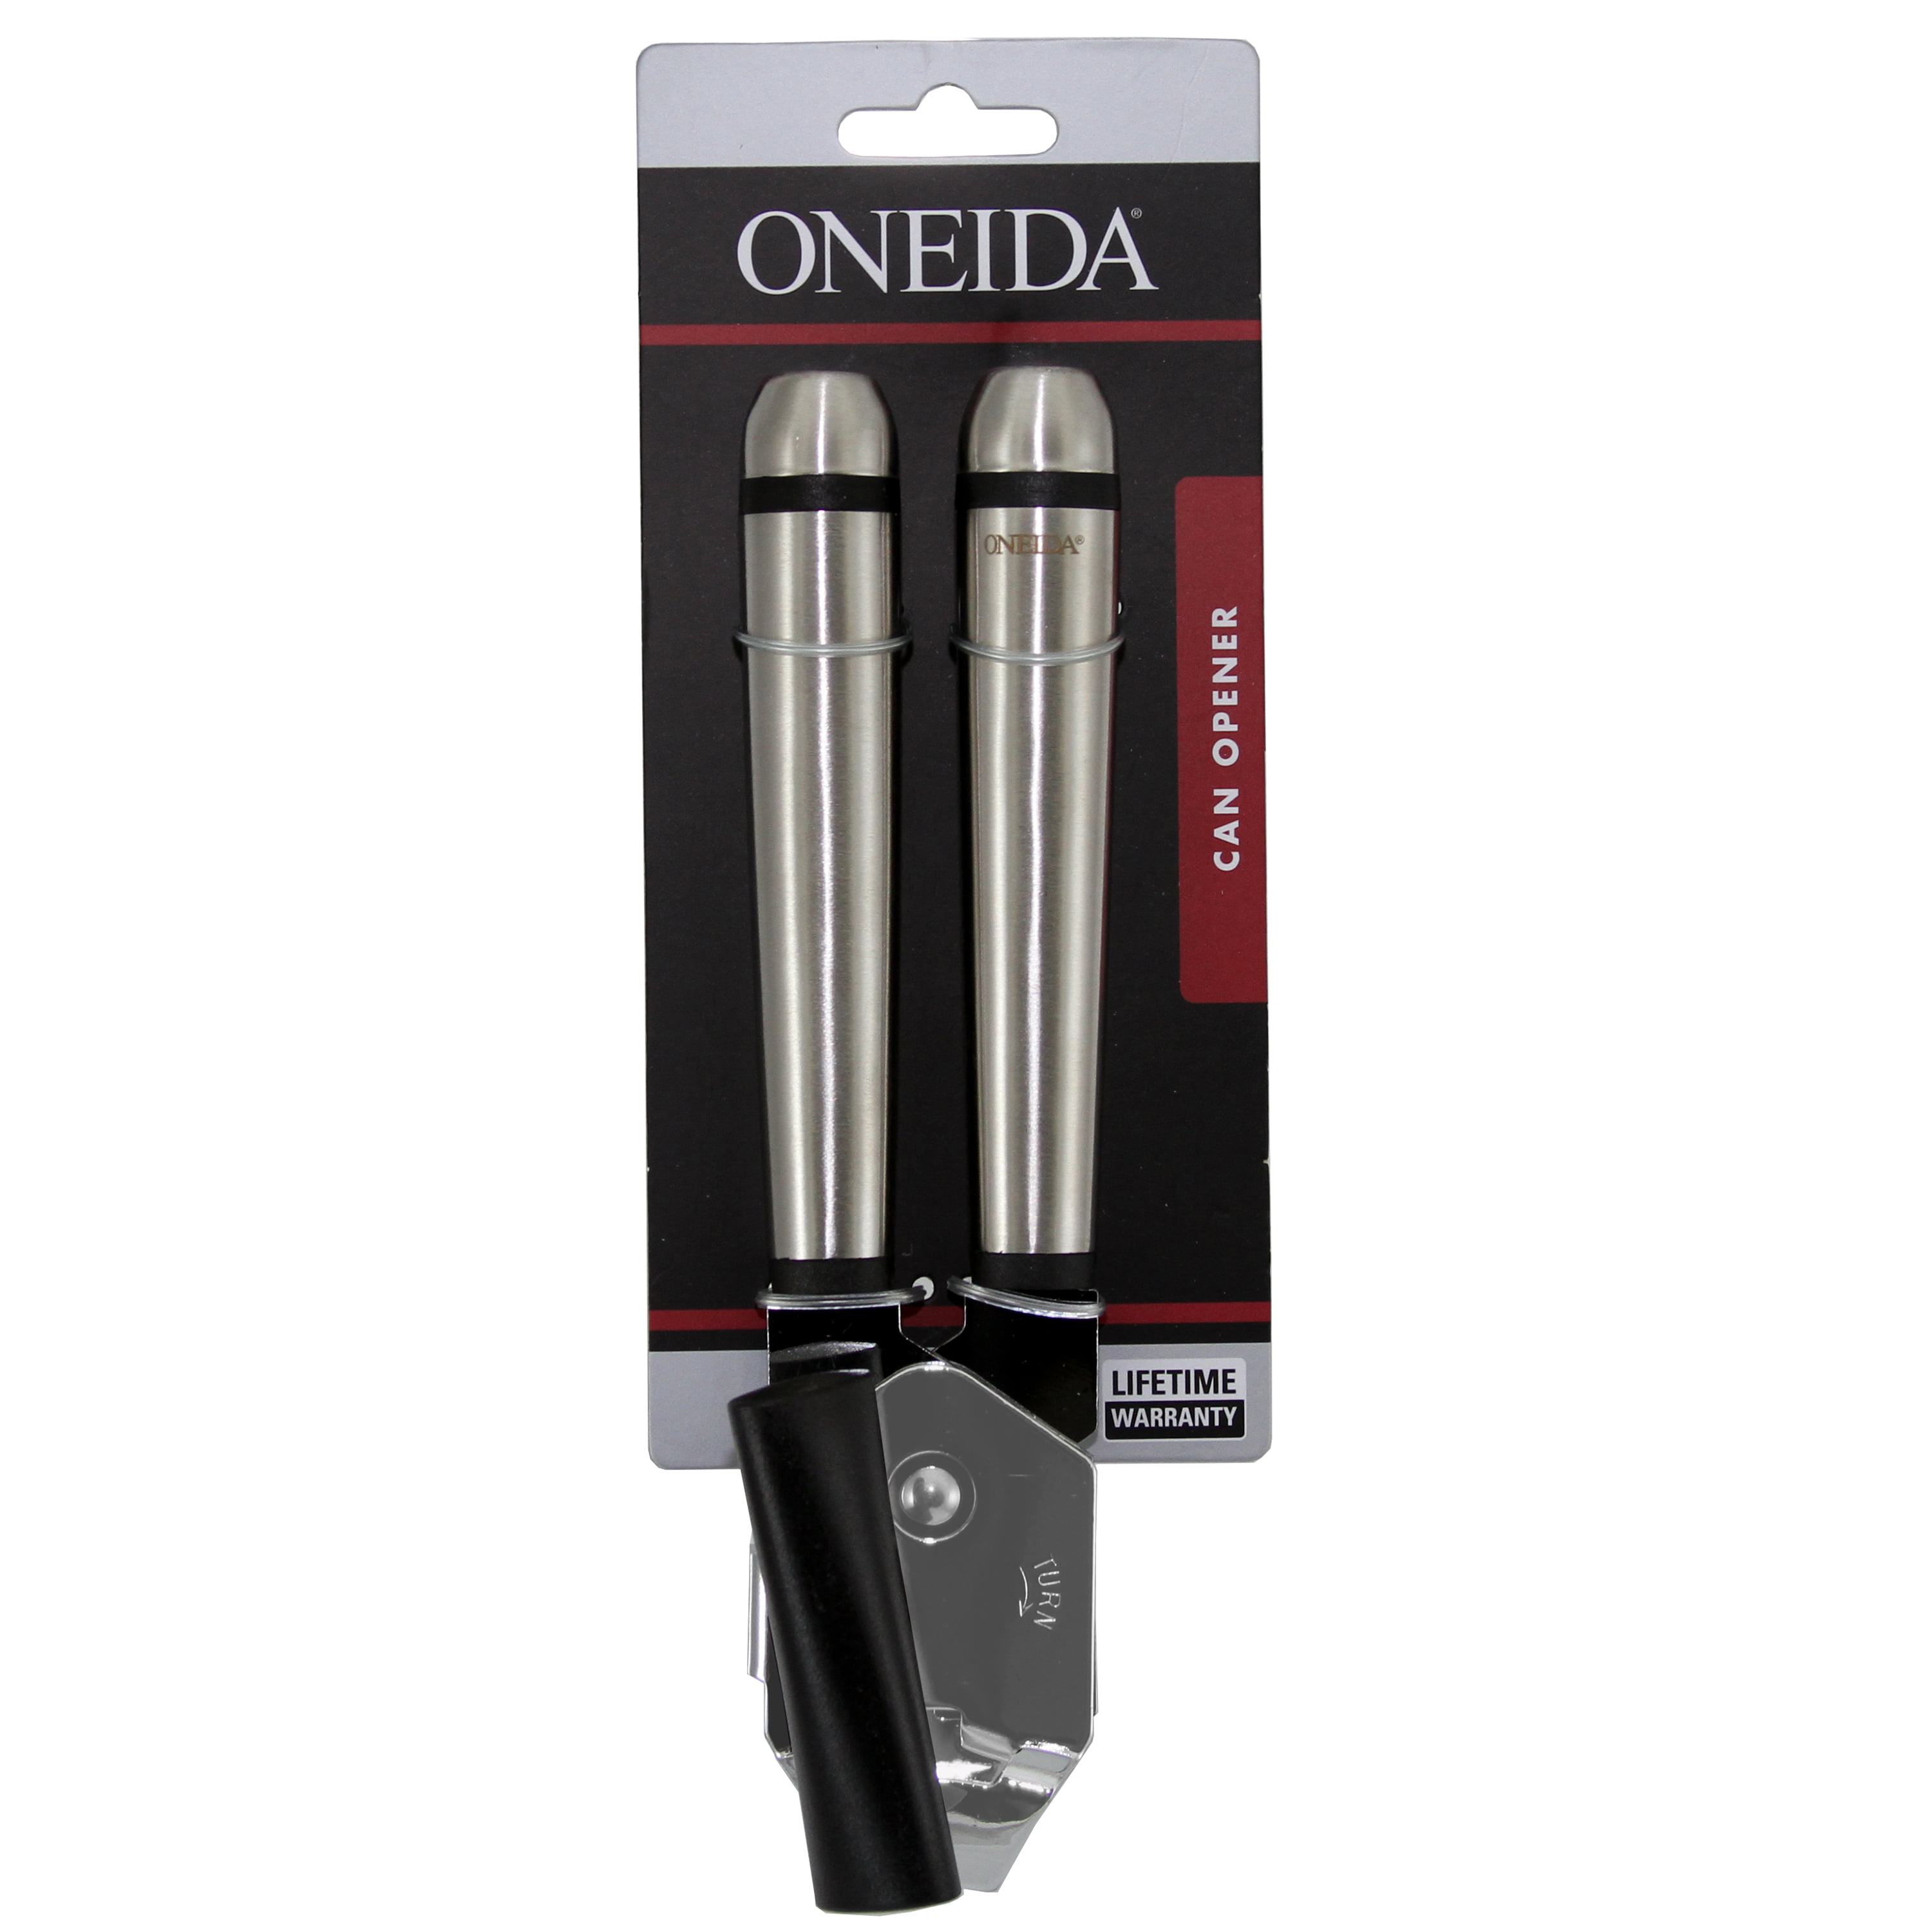 Oneida 18/8 Stainless Steel Lifetime Warranty Can Opener